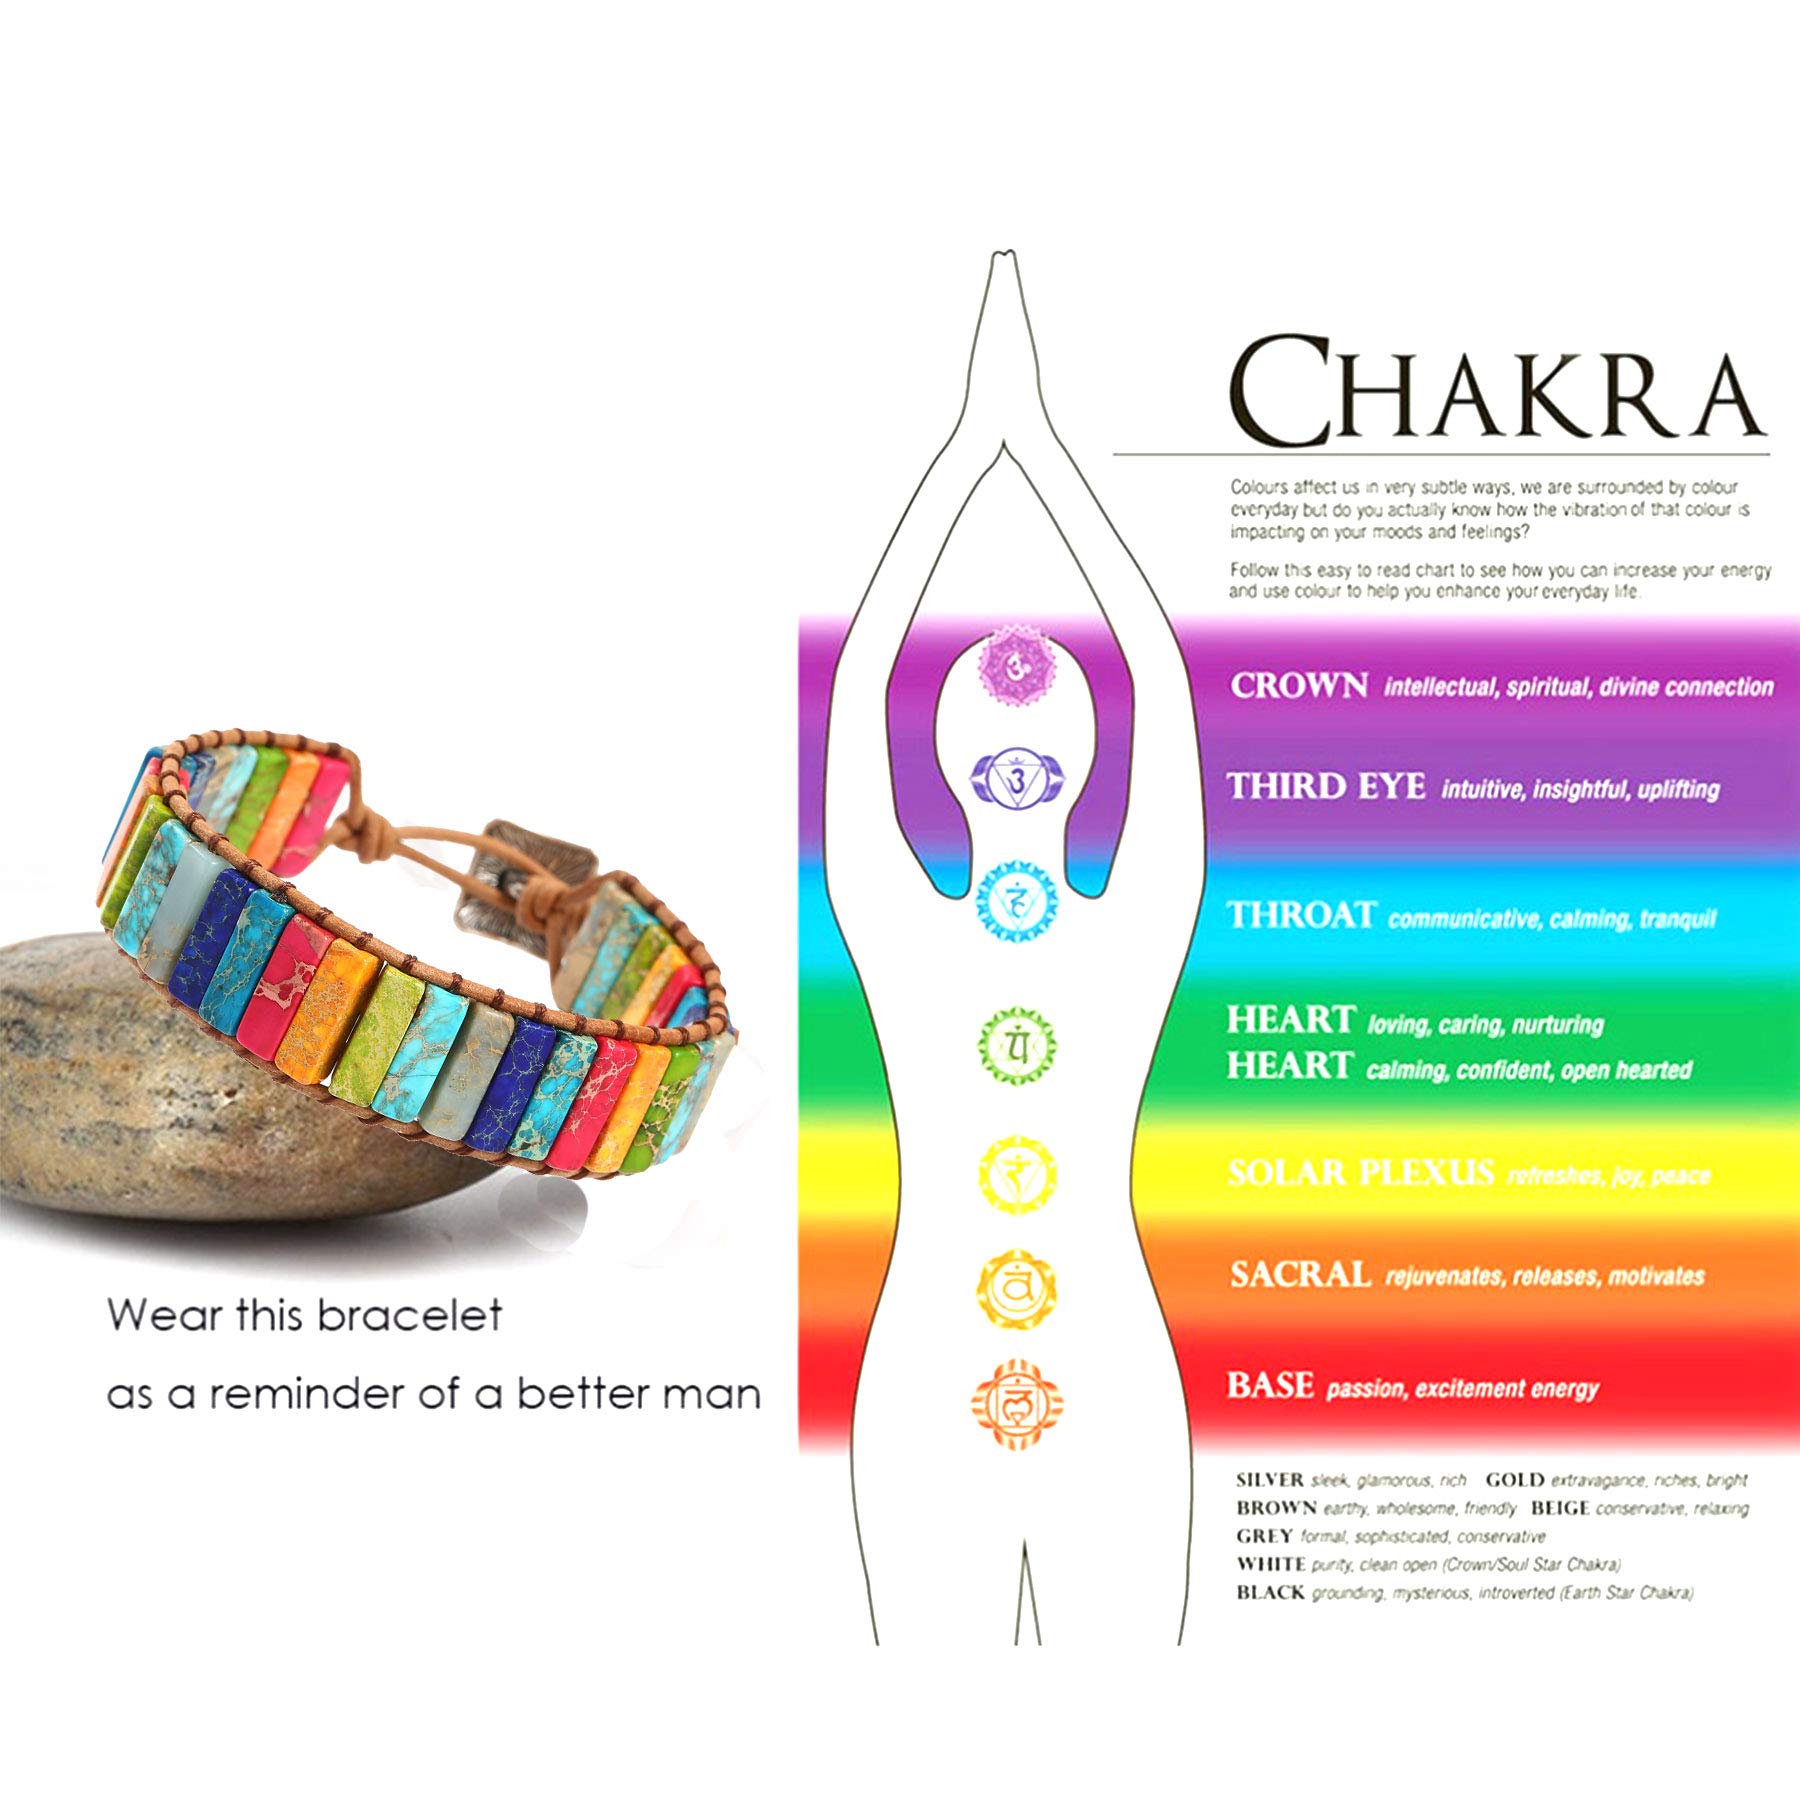 Plumiss 7 Chakra Bracelets for Women Boho Handmade Natural Jasper Stone Healing Energy Bead Leather Wrap Bracelet Jewelry Collection